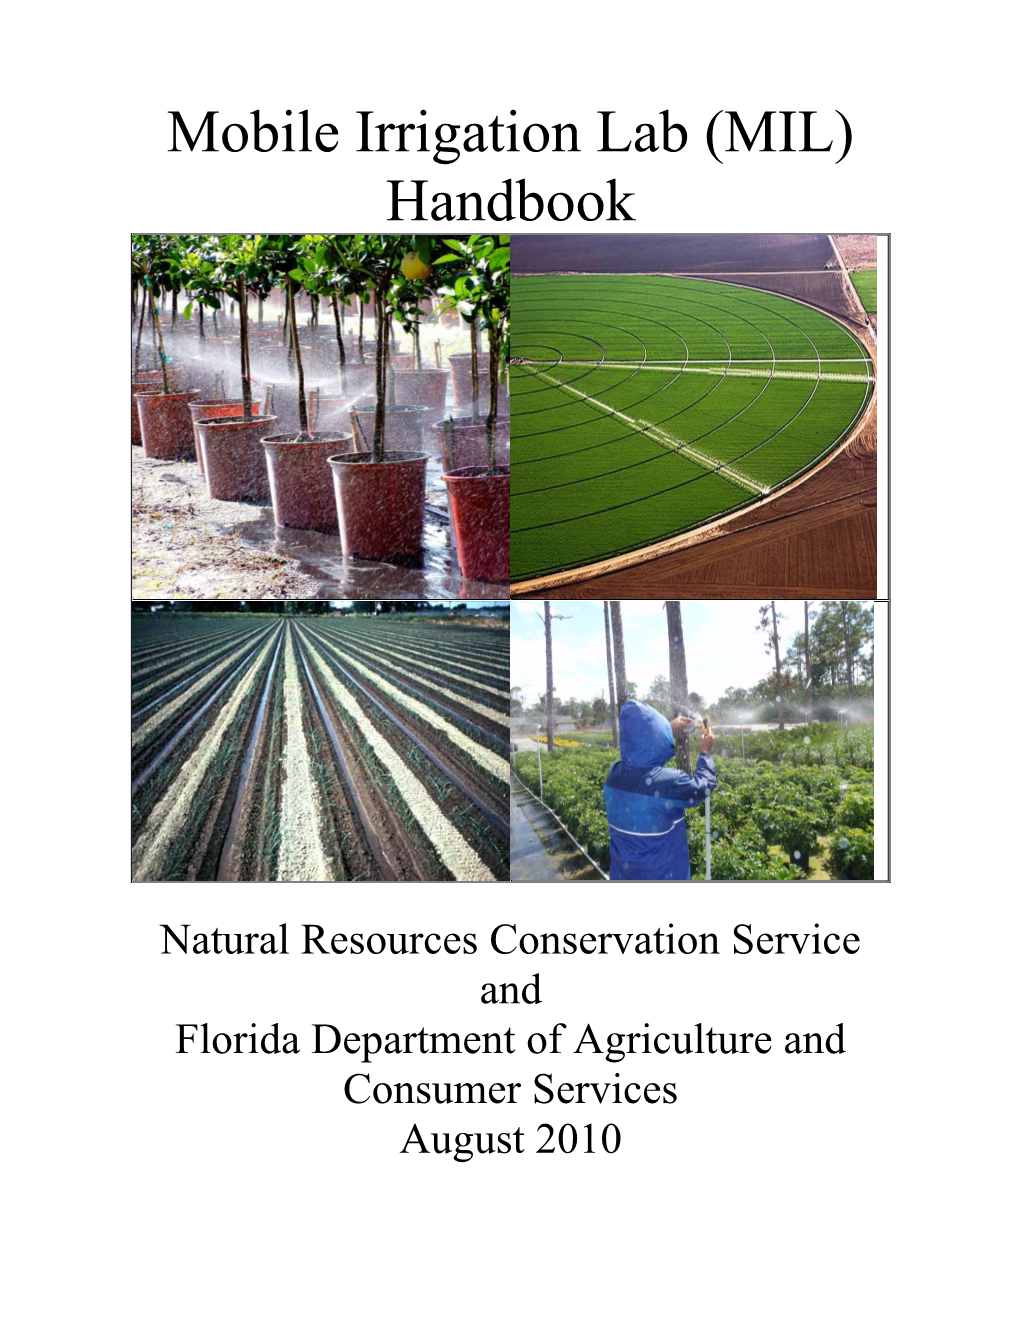 Mobile Irrigation Lab (MIL) Handbook